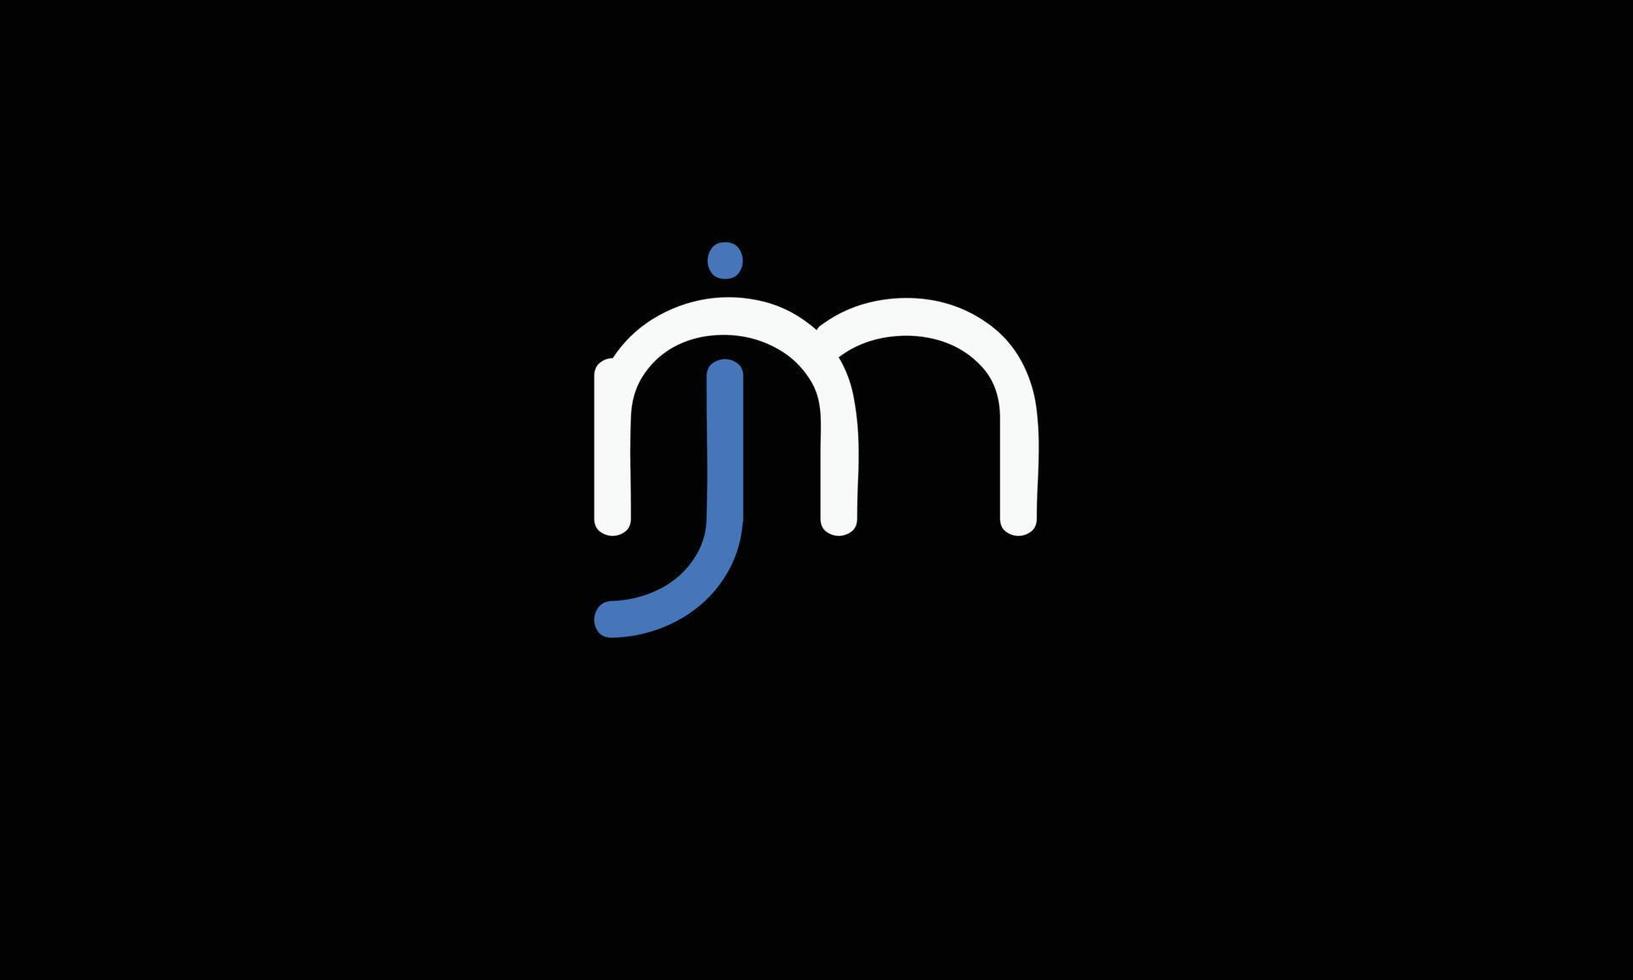 alfabet letters initialen monogram logo mj, jm, m en j vector